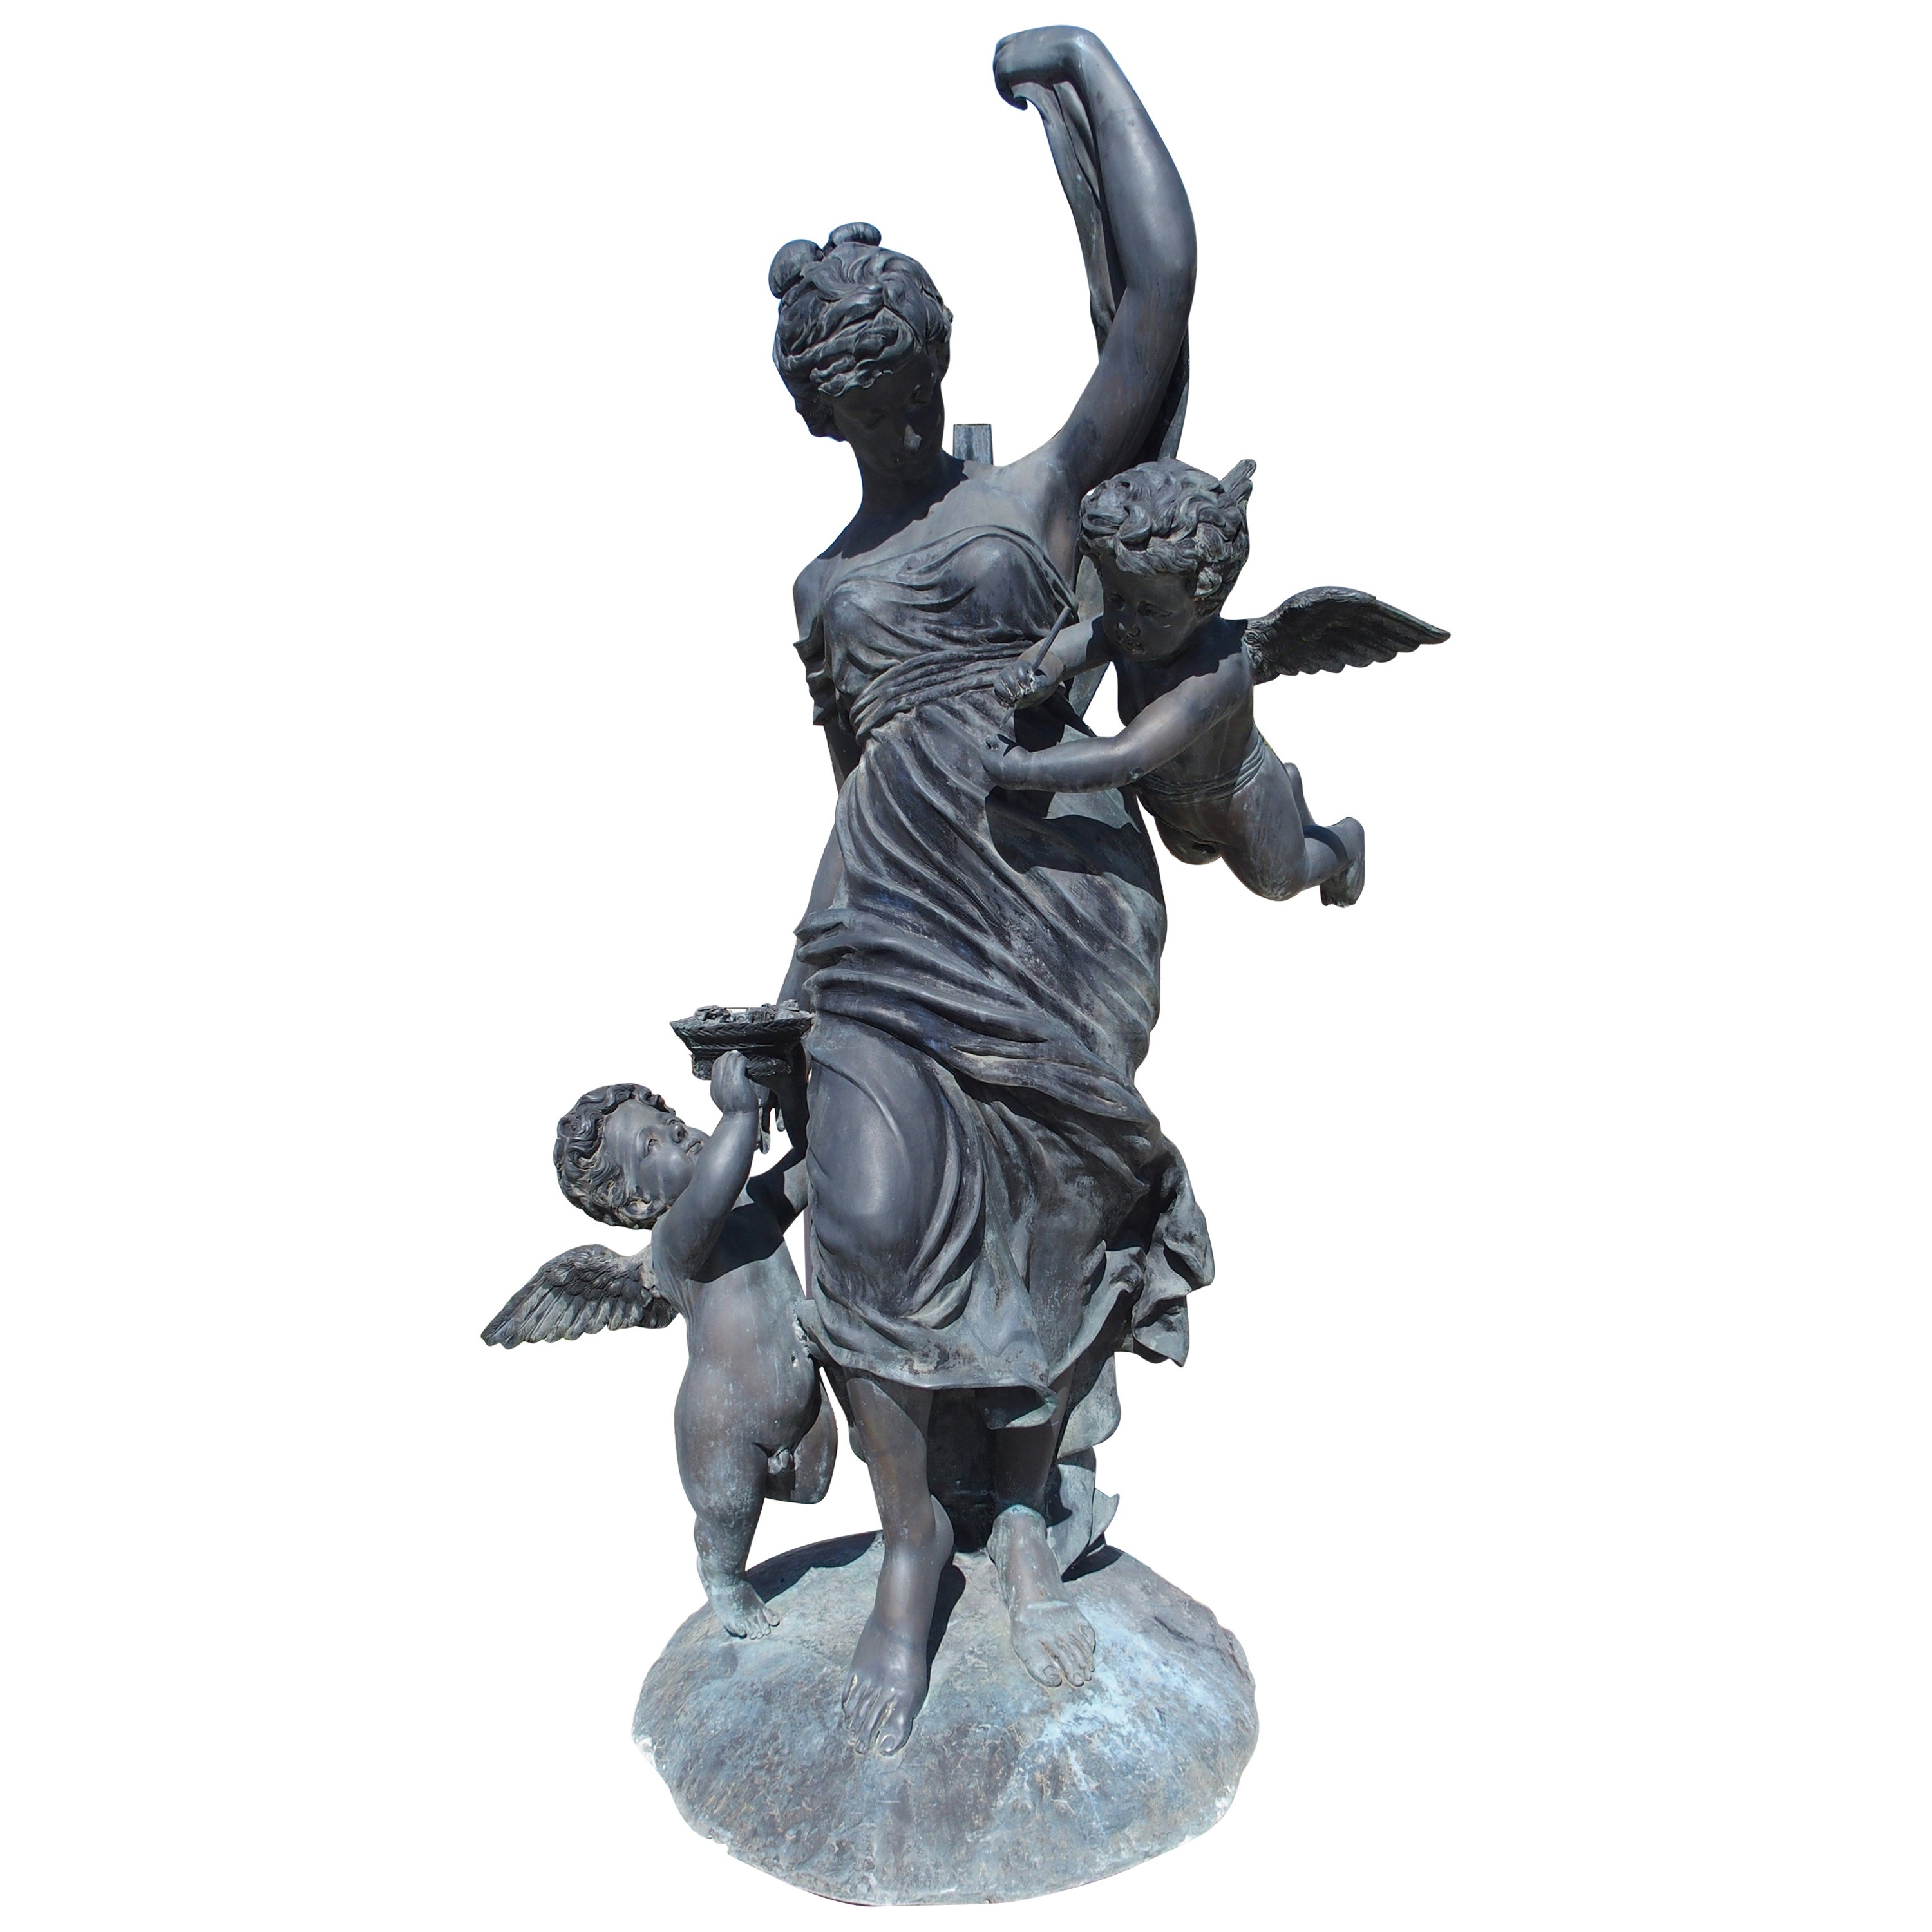 Monumental French Cast Sculpture of L'Amour, after Louis Auguste Moreau, H-88.75